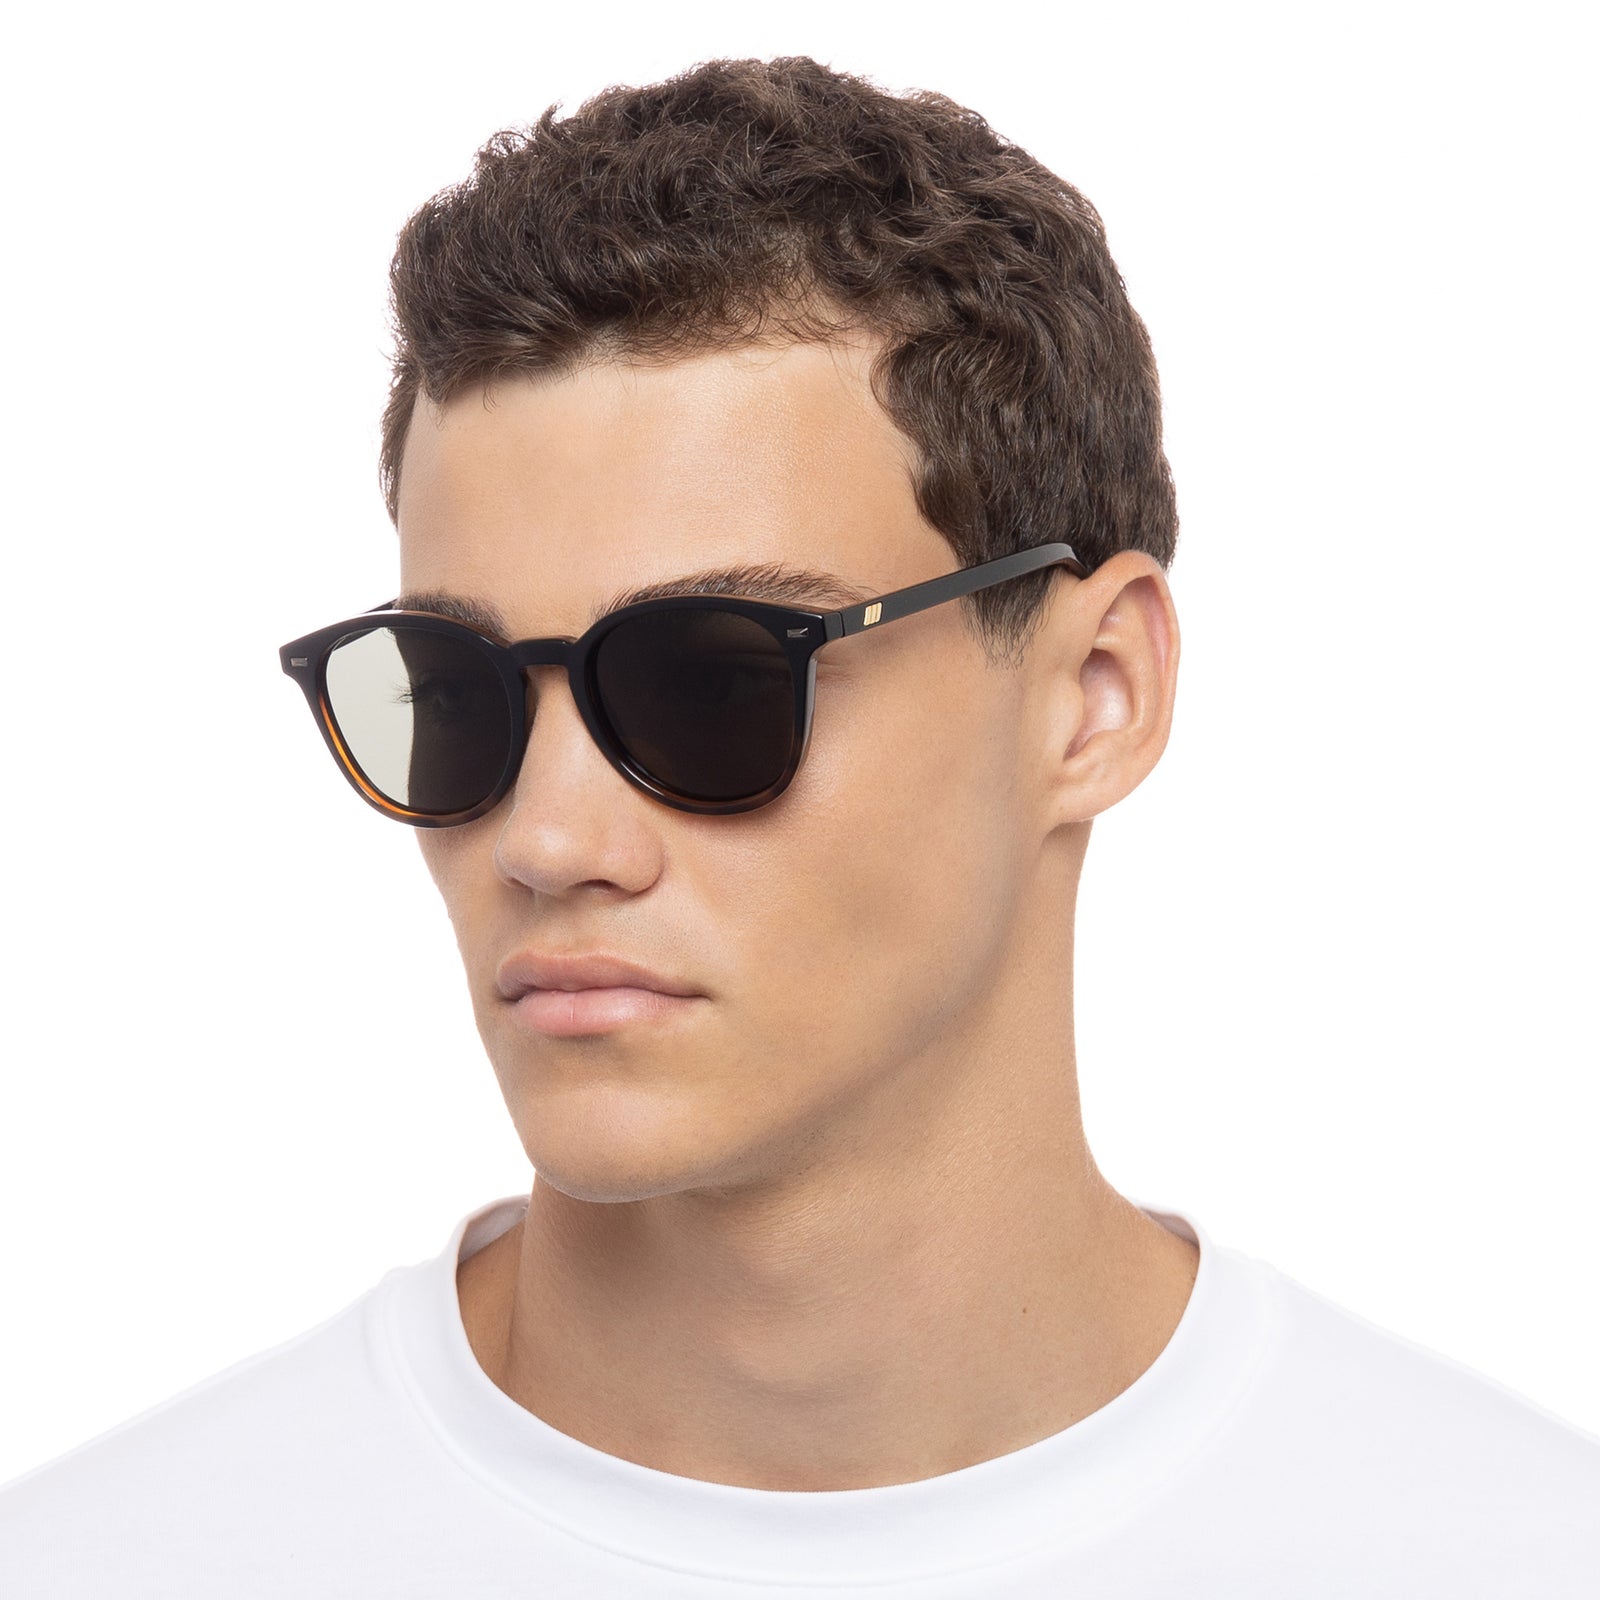 Bandwagon Black Tort Uni-Sex Le | Sunglasses Specs Round